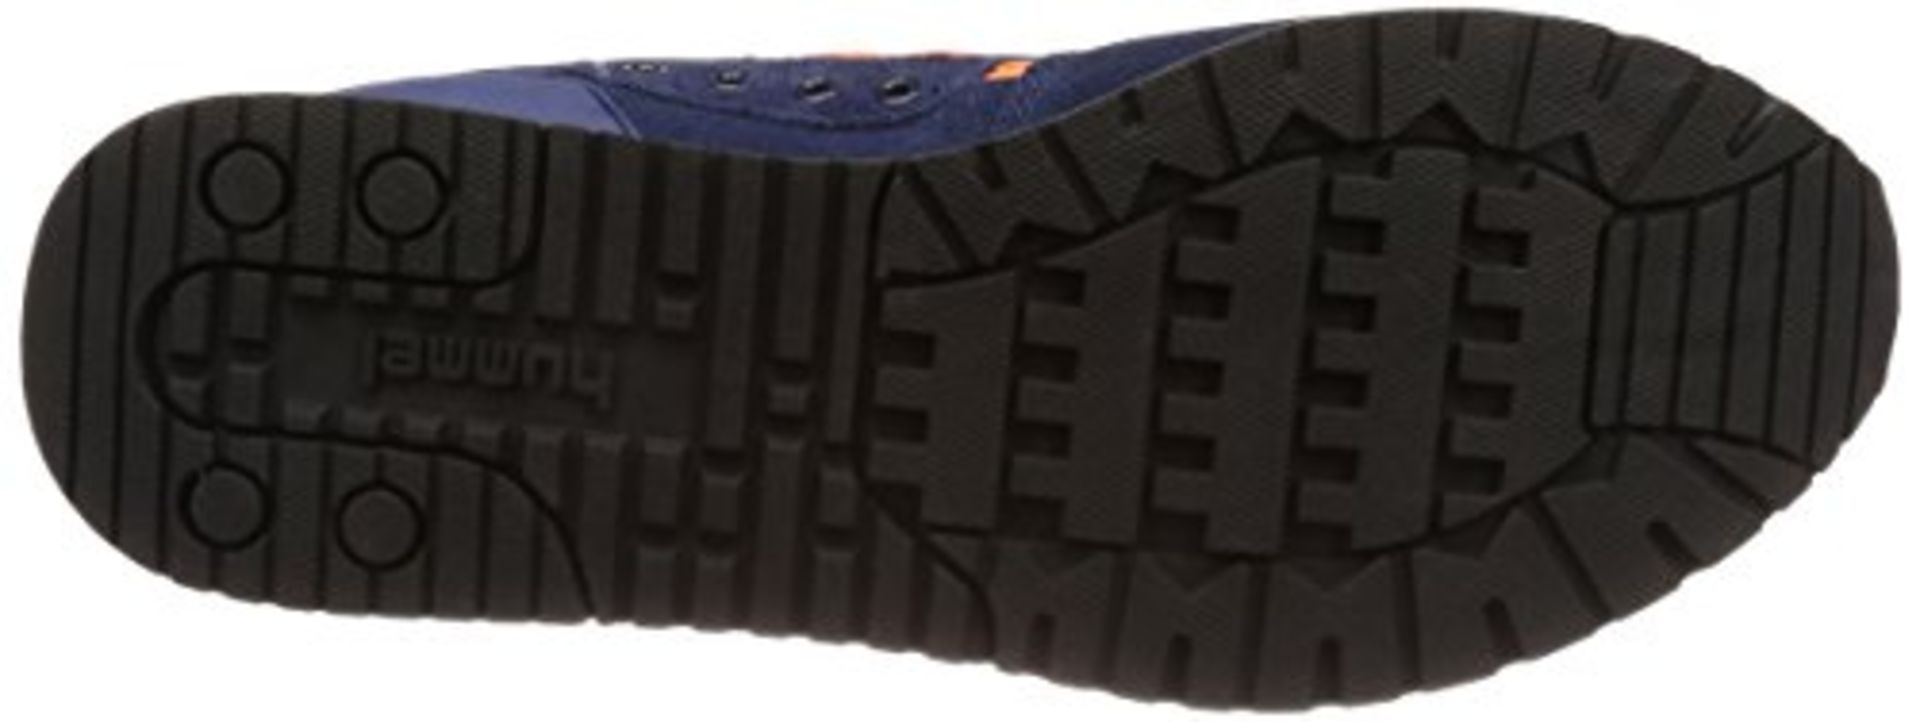 1 x hummel Marathona Trainers Shoes Dark Blue, HM201999, Peacoat, 42 Size: 42 EU | EAN: 57004948785 - Image 3 of 7